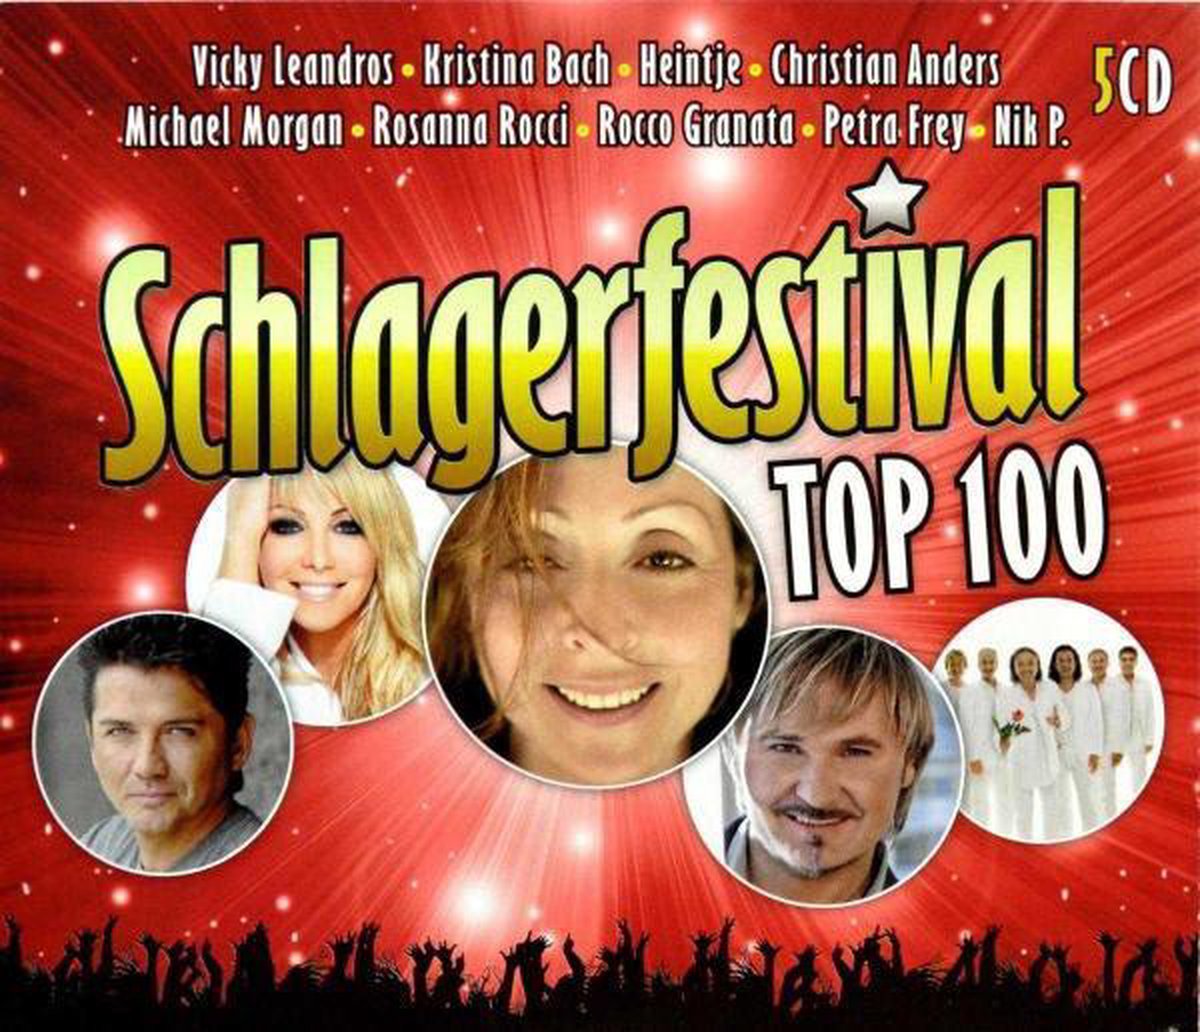 Schlagerfestival Top 100, various artists | CD (album) | Muziek | bol.com